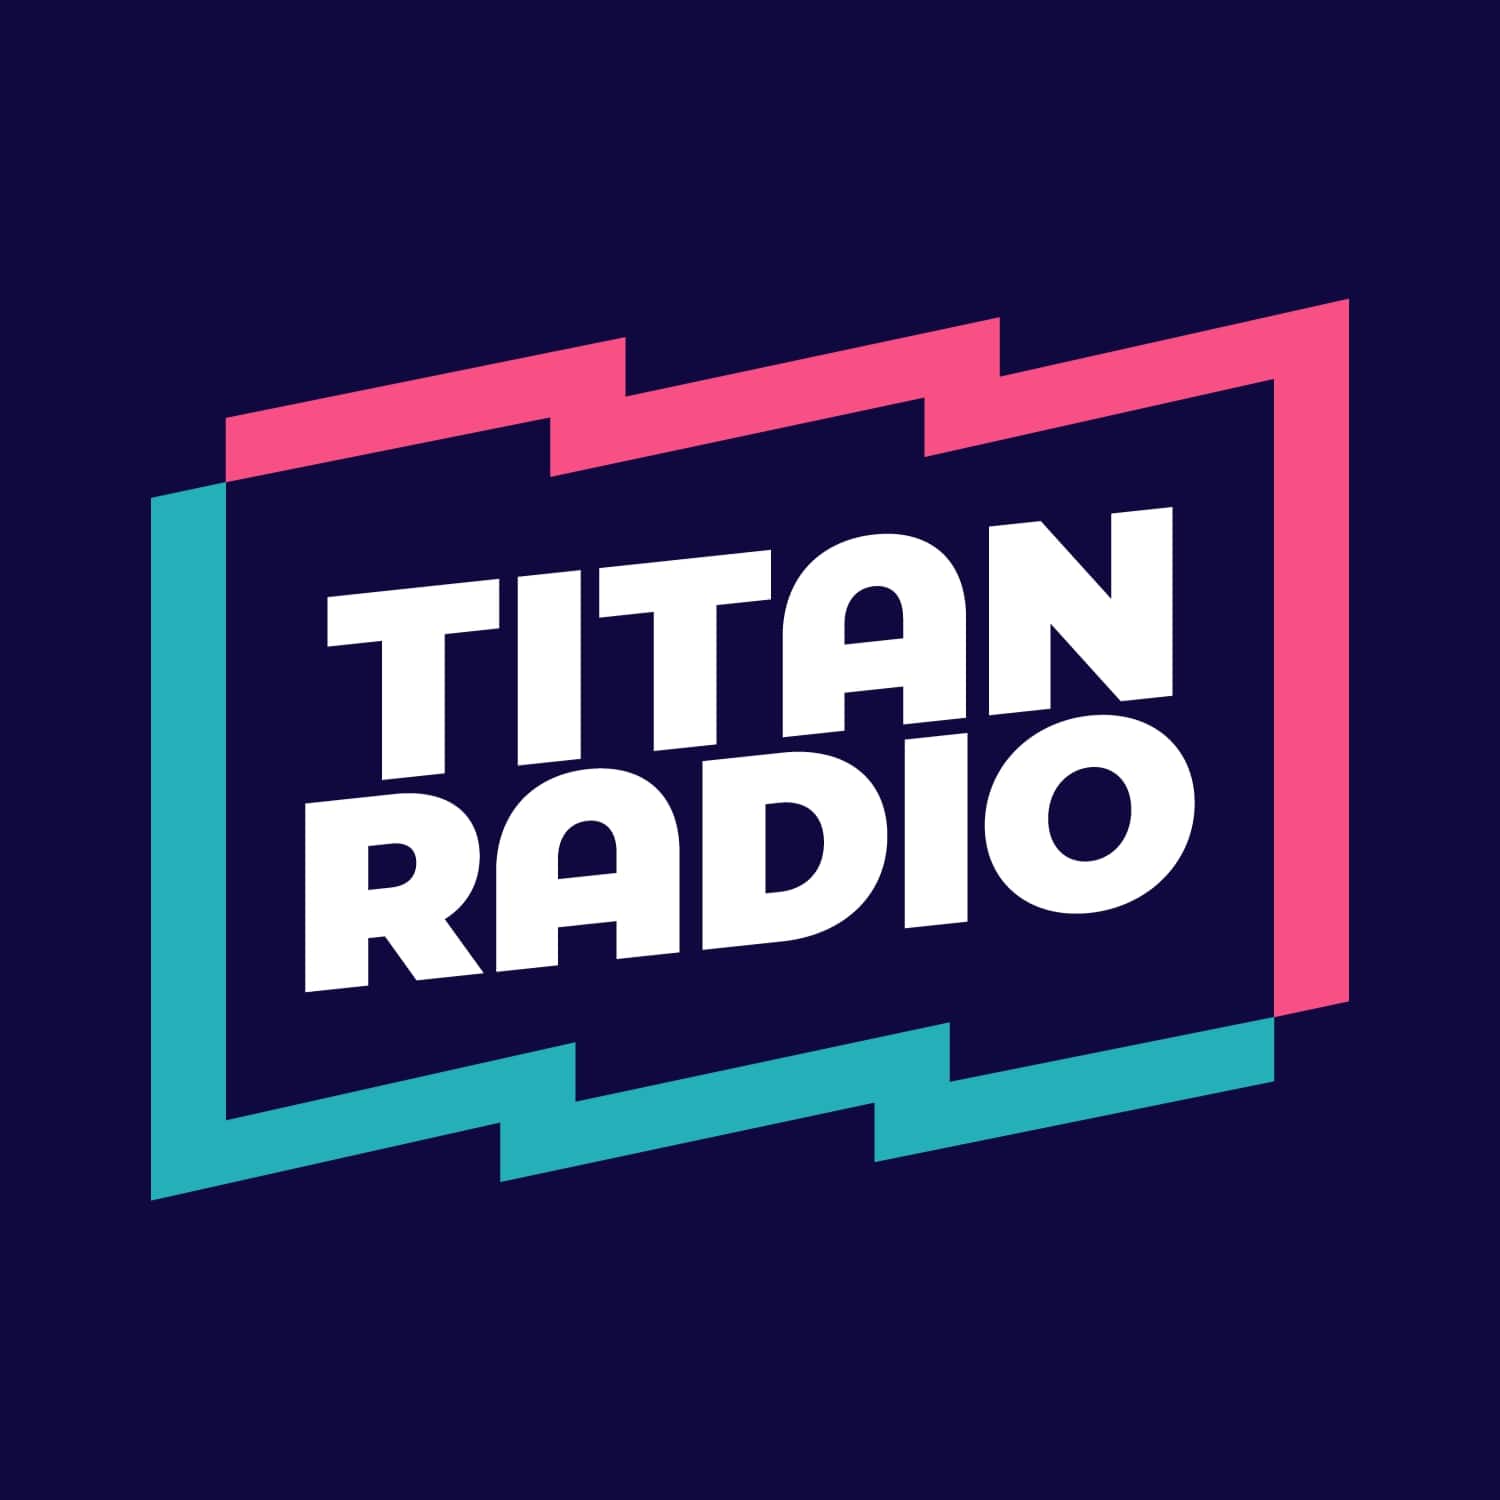 titan radio image